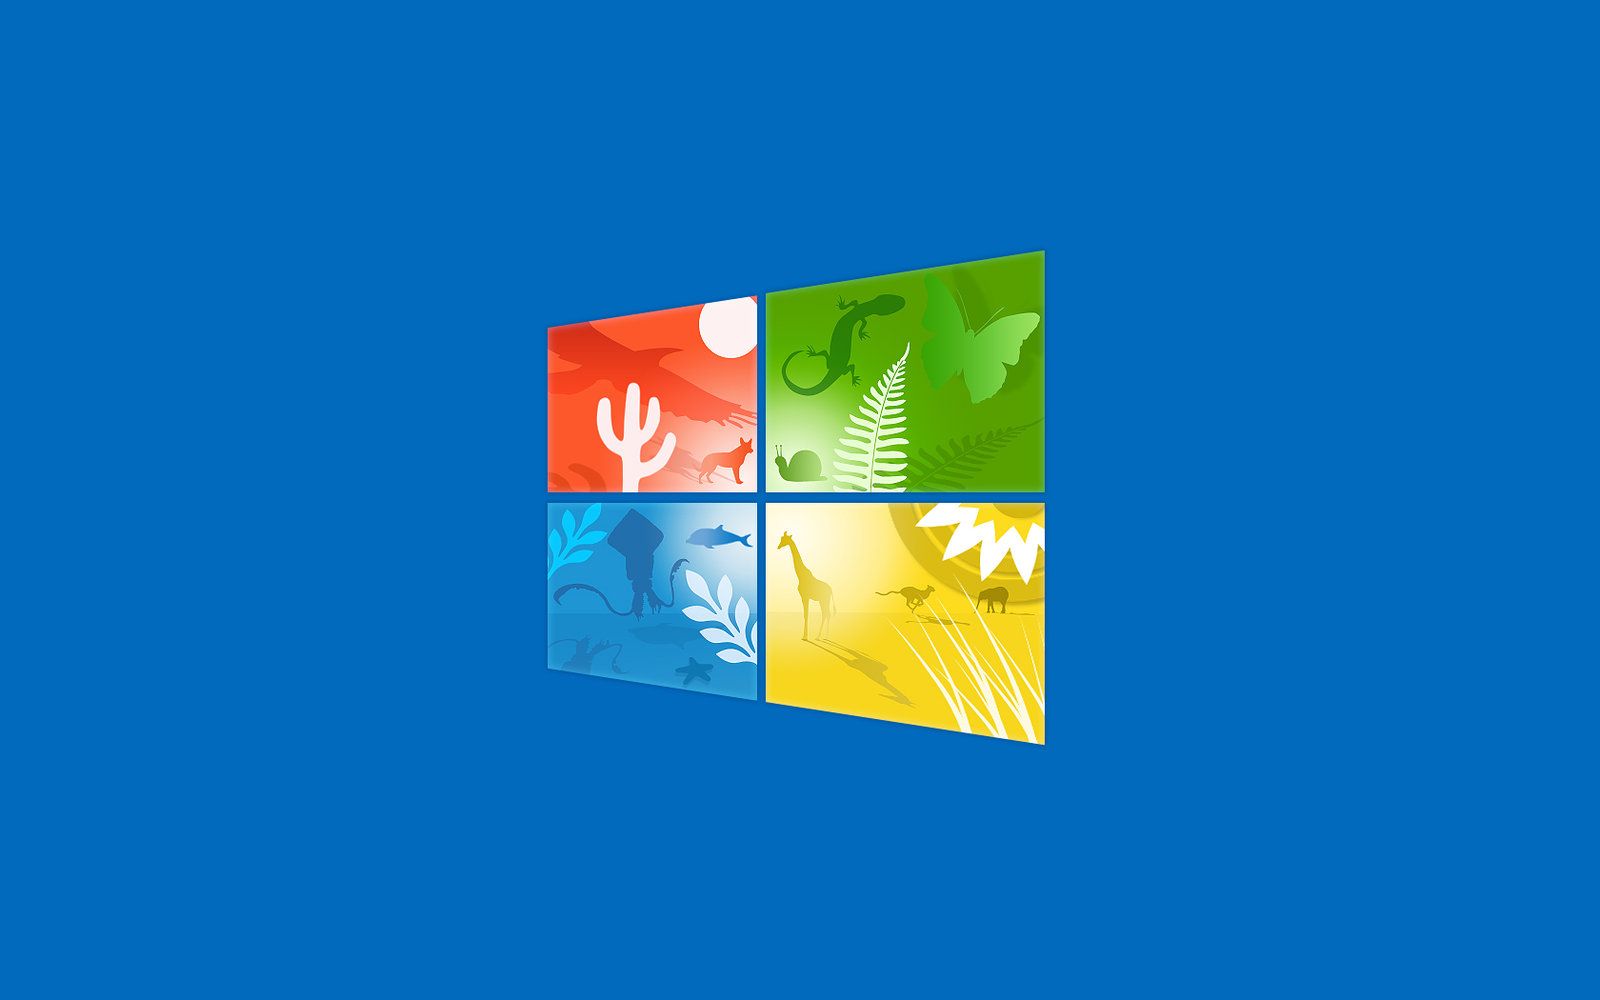 Windows 10 2015 Blue Background - typta.com